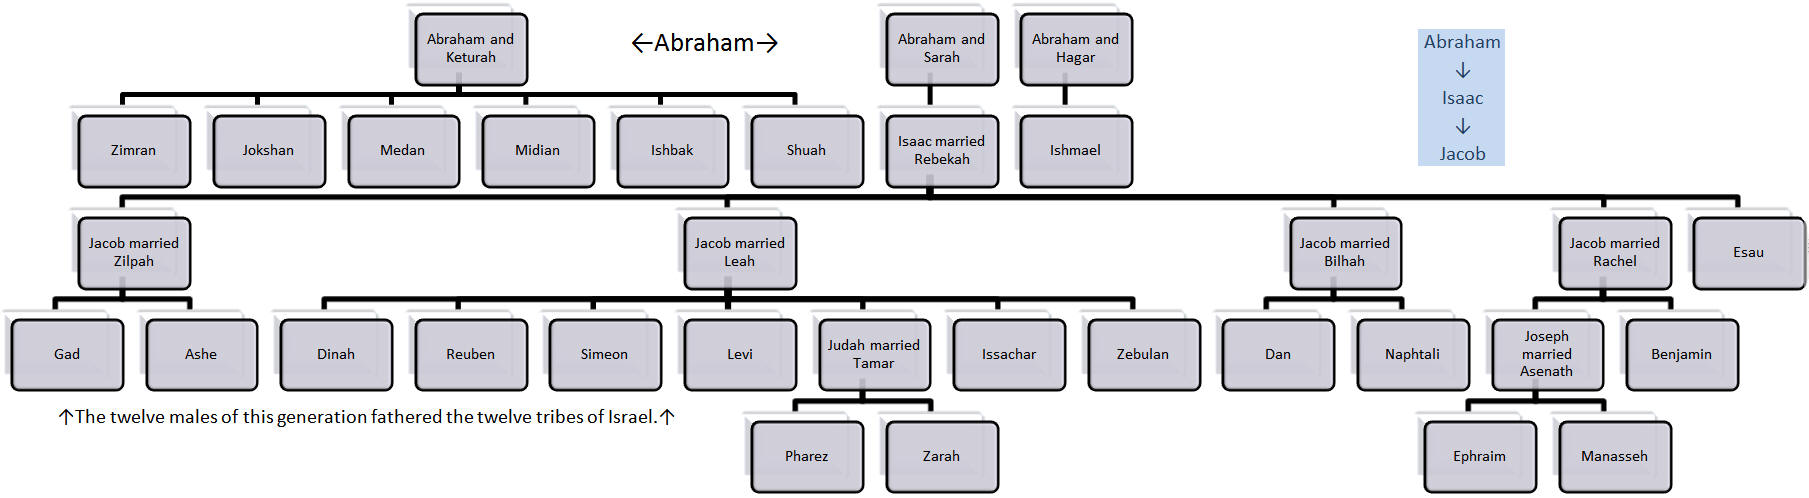 abraham family tree worksheet